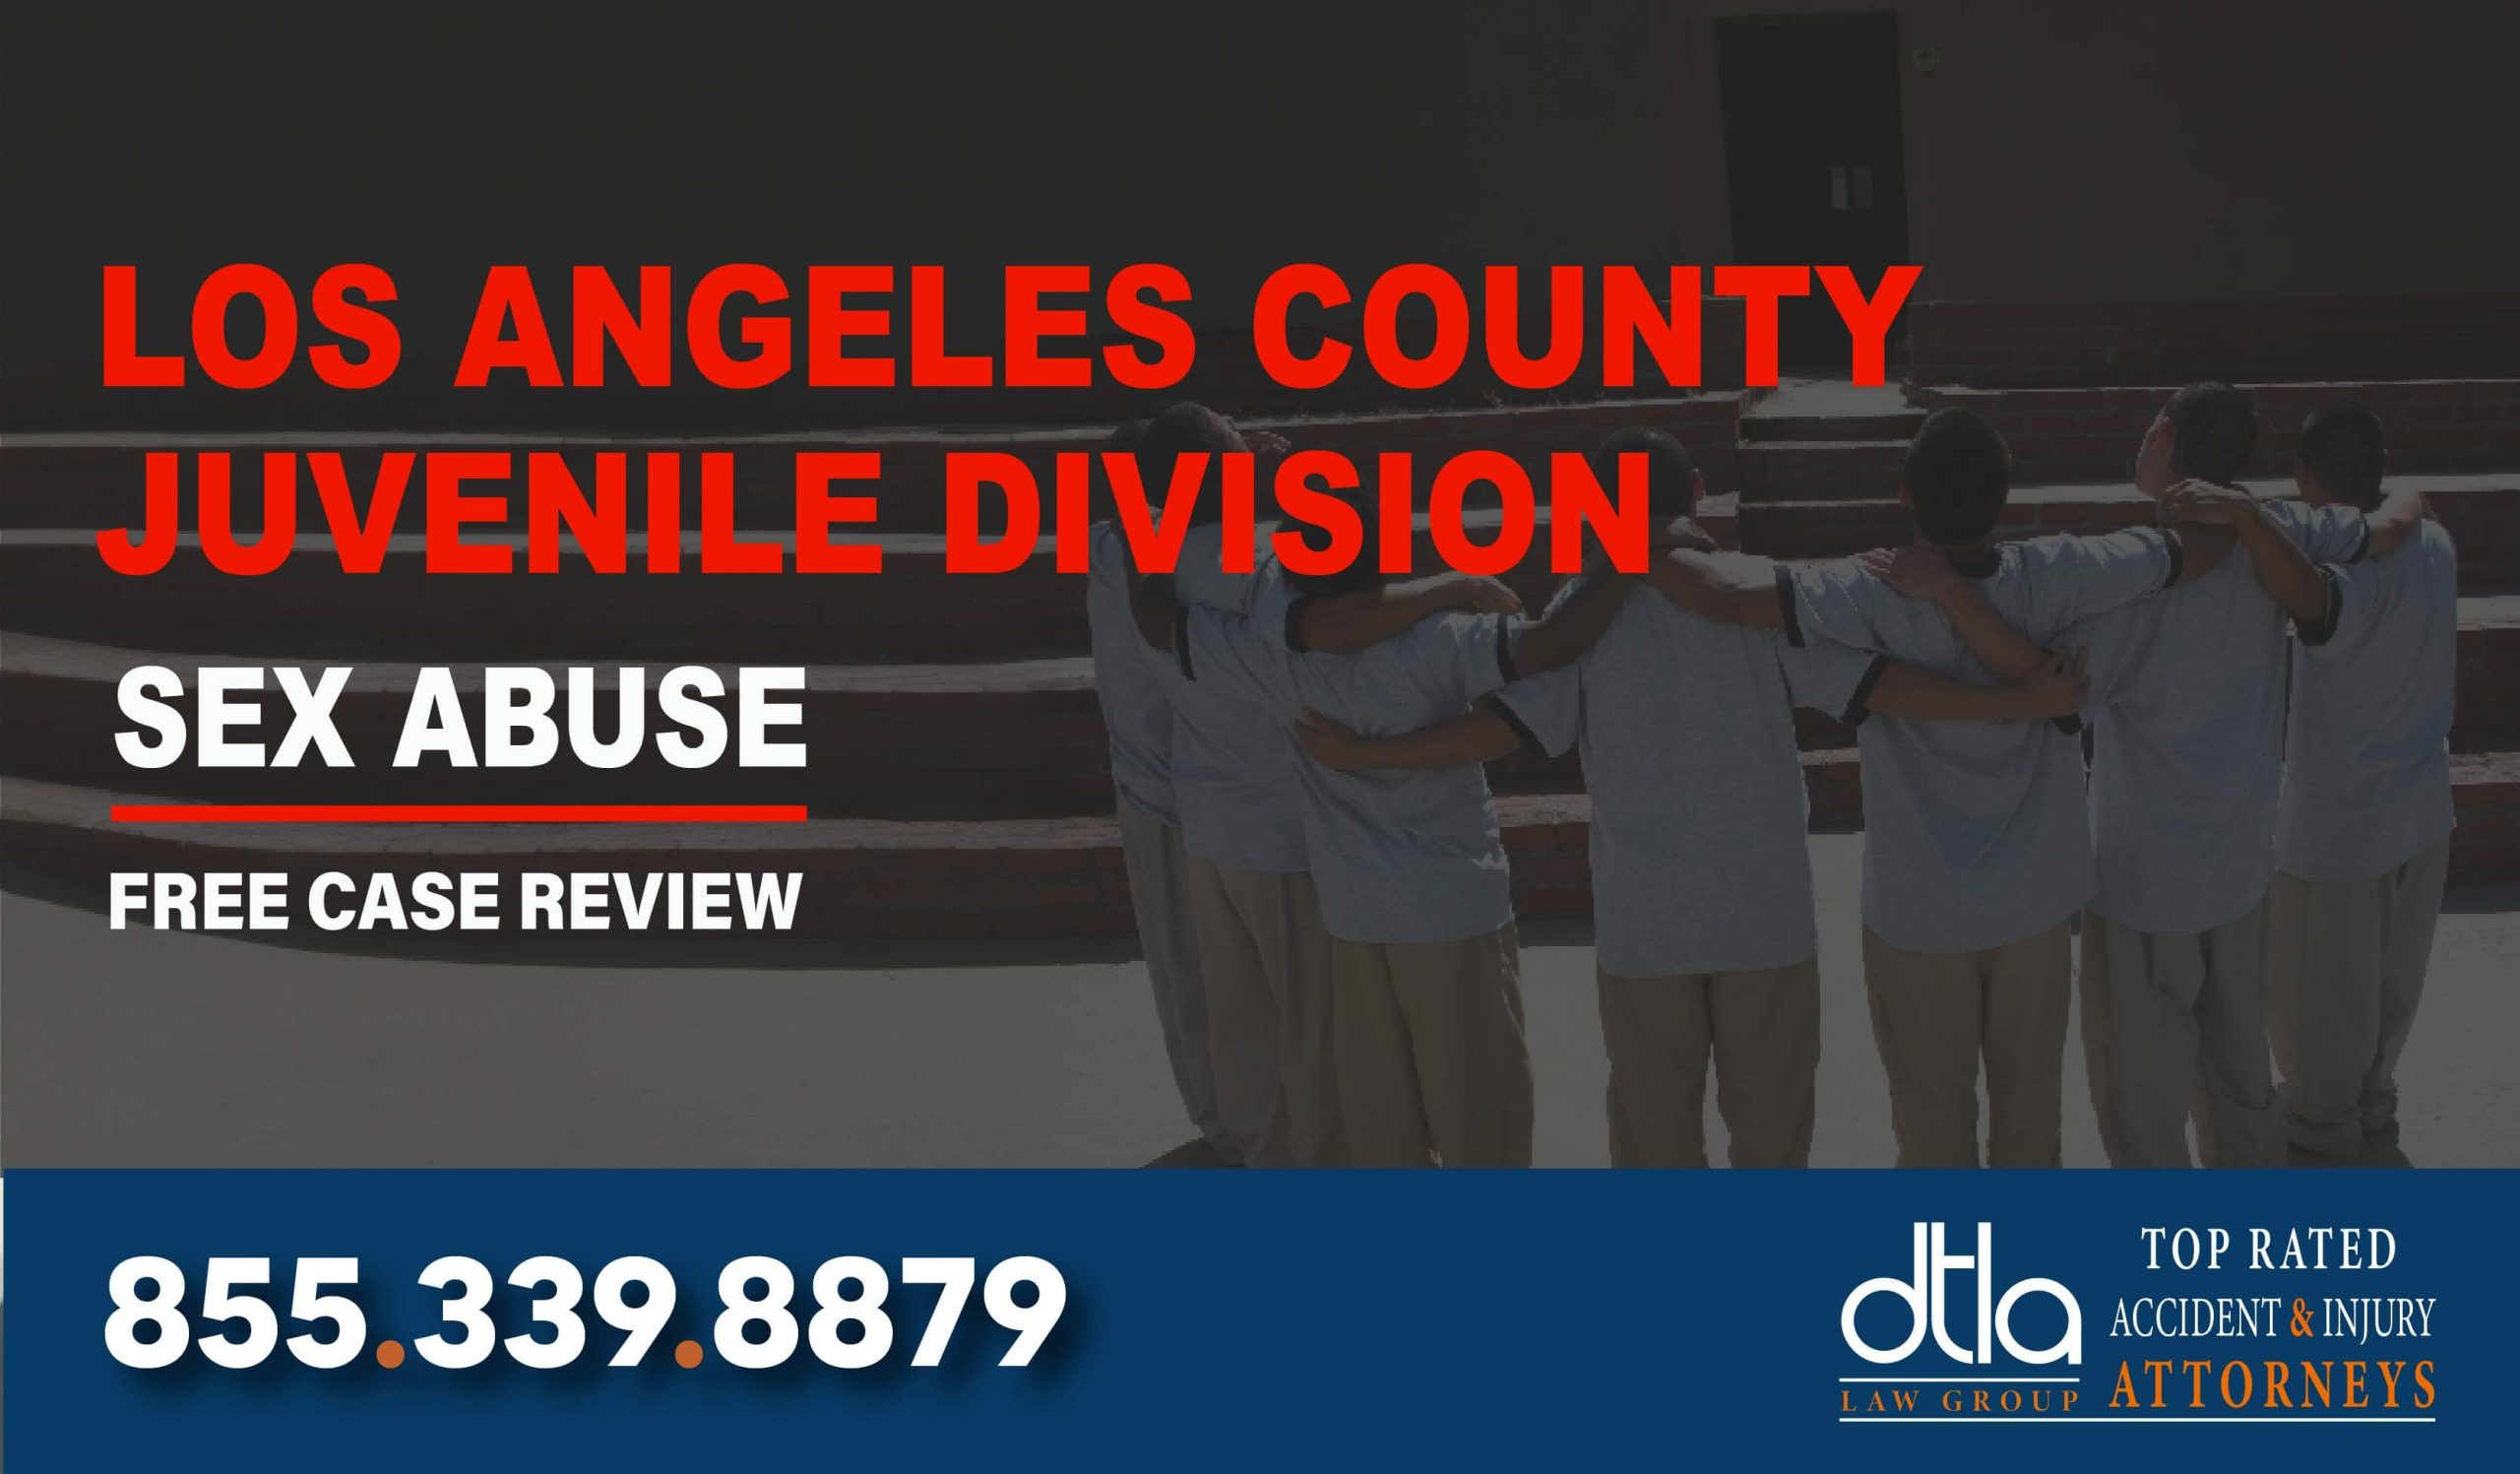 Los Angeles County Juvenile Division Lawsuit Lawyer sue liability attorney compensation incident